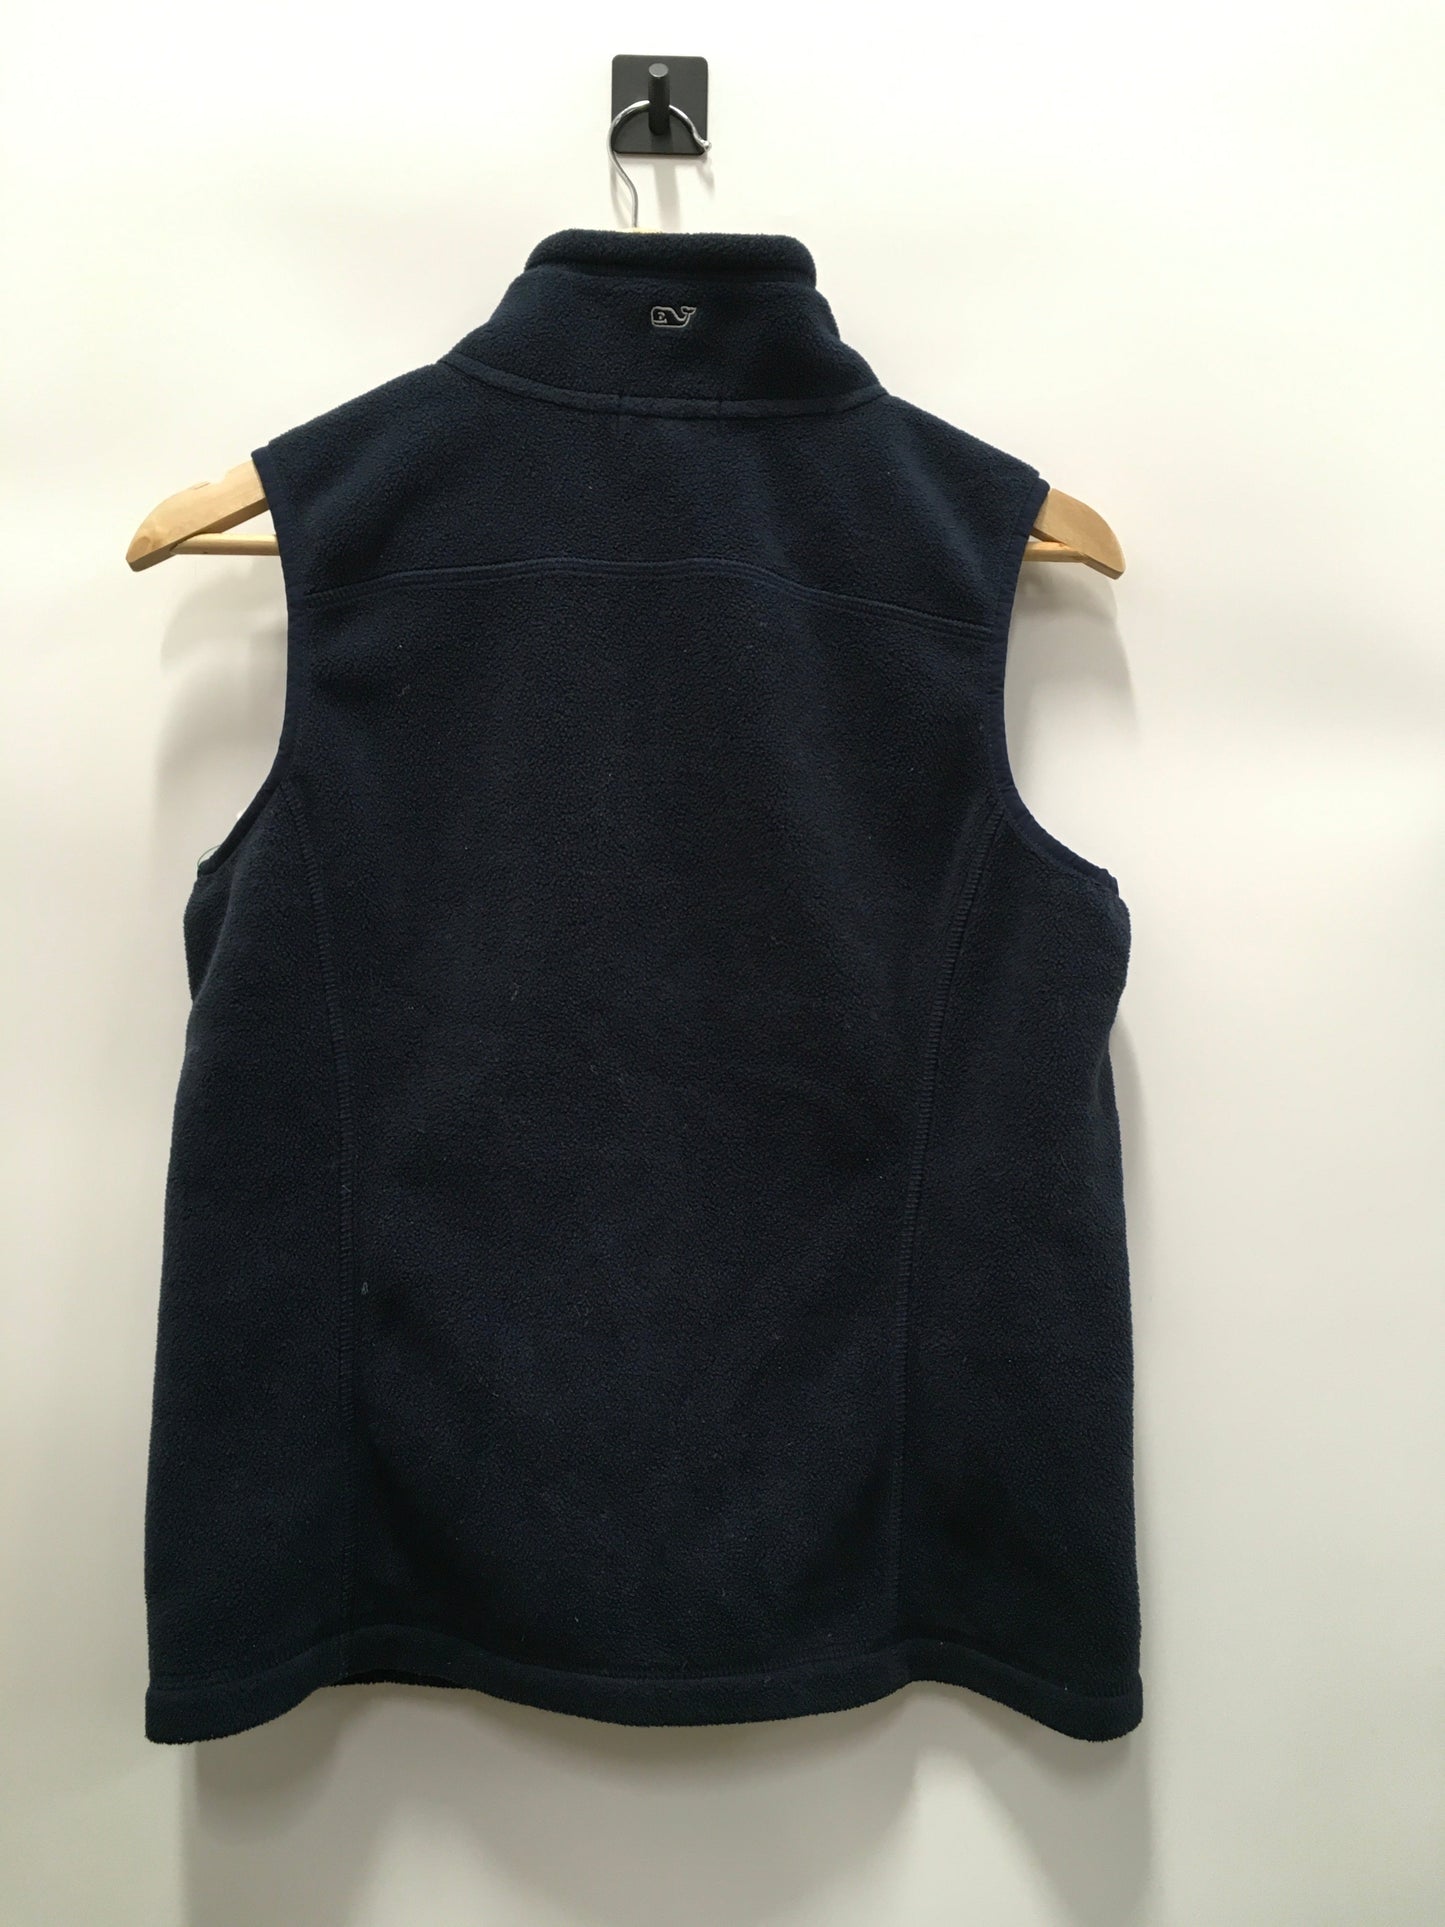 Vest Fleece By Vineyard Vines  Size: Xs